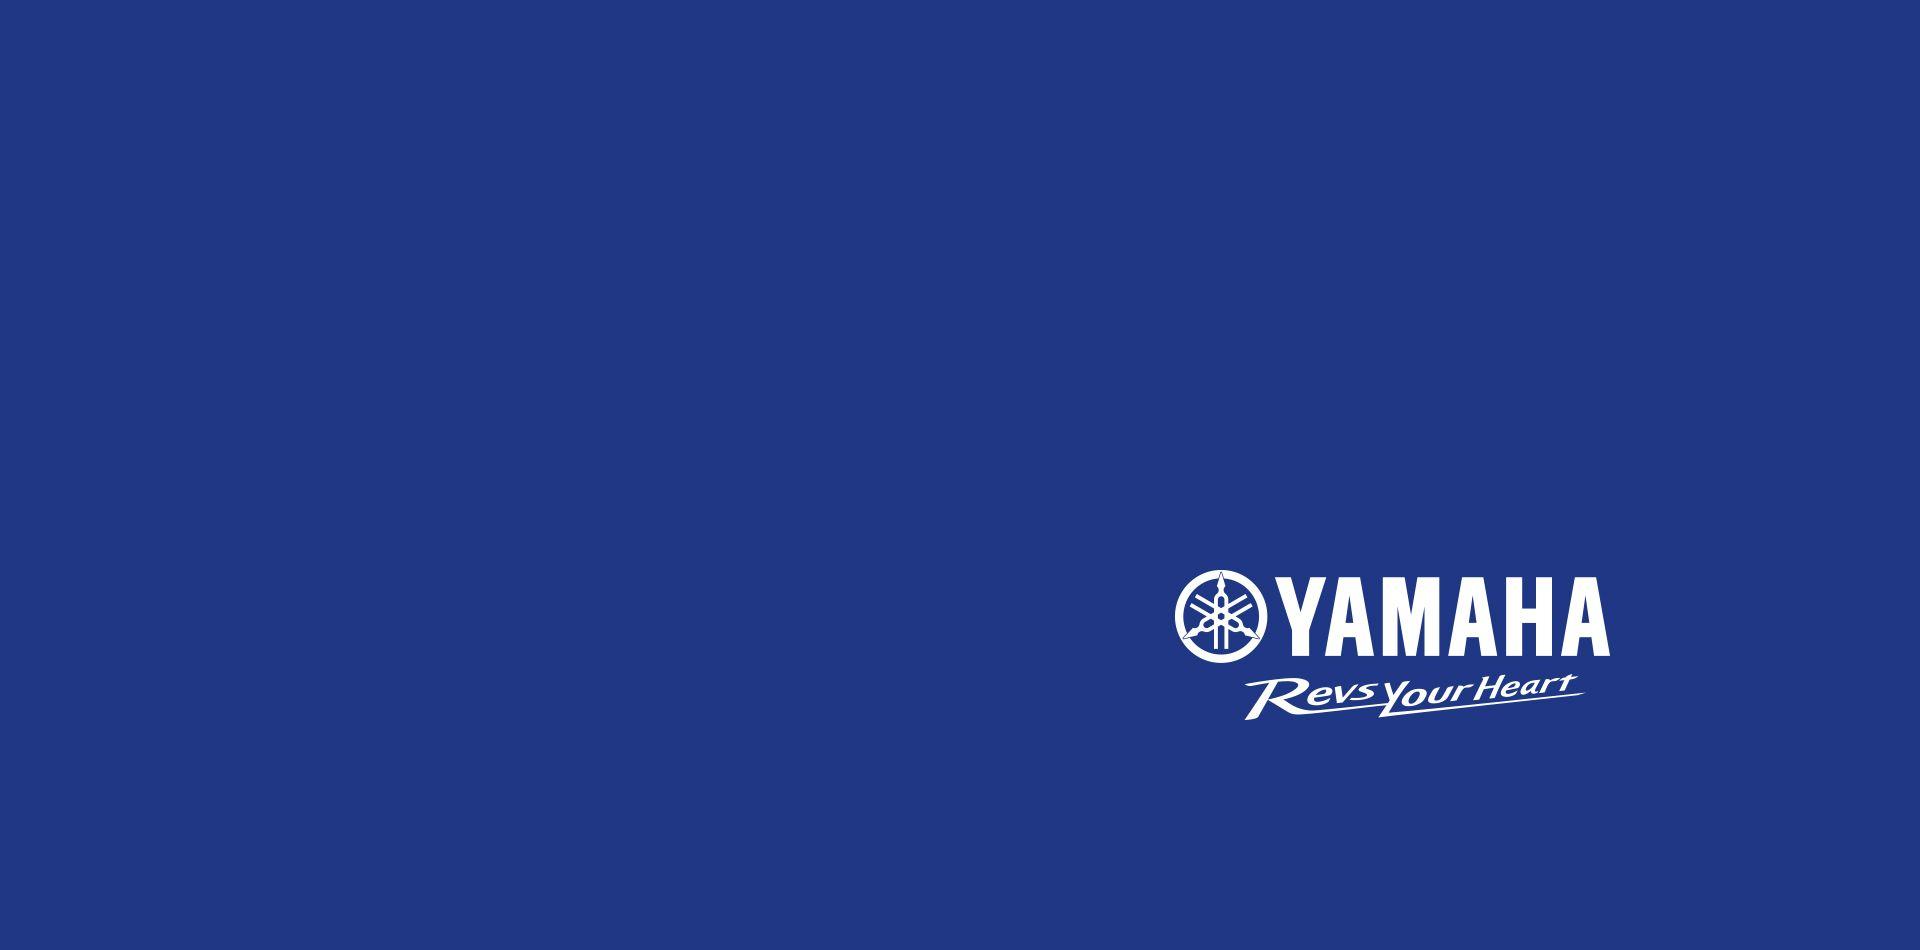 Yamaha Racing Logo Wallpaper Free Yamaha Racing Logo Background